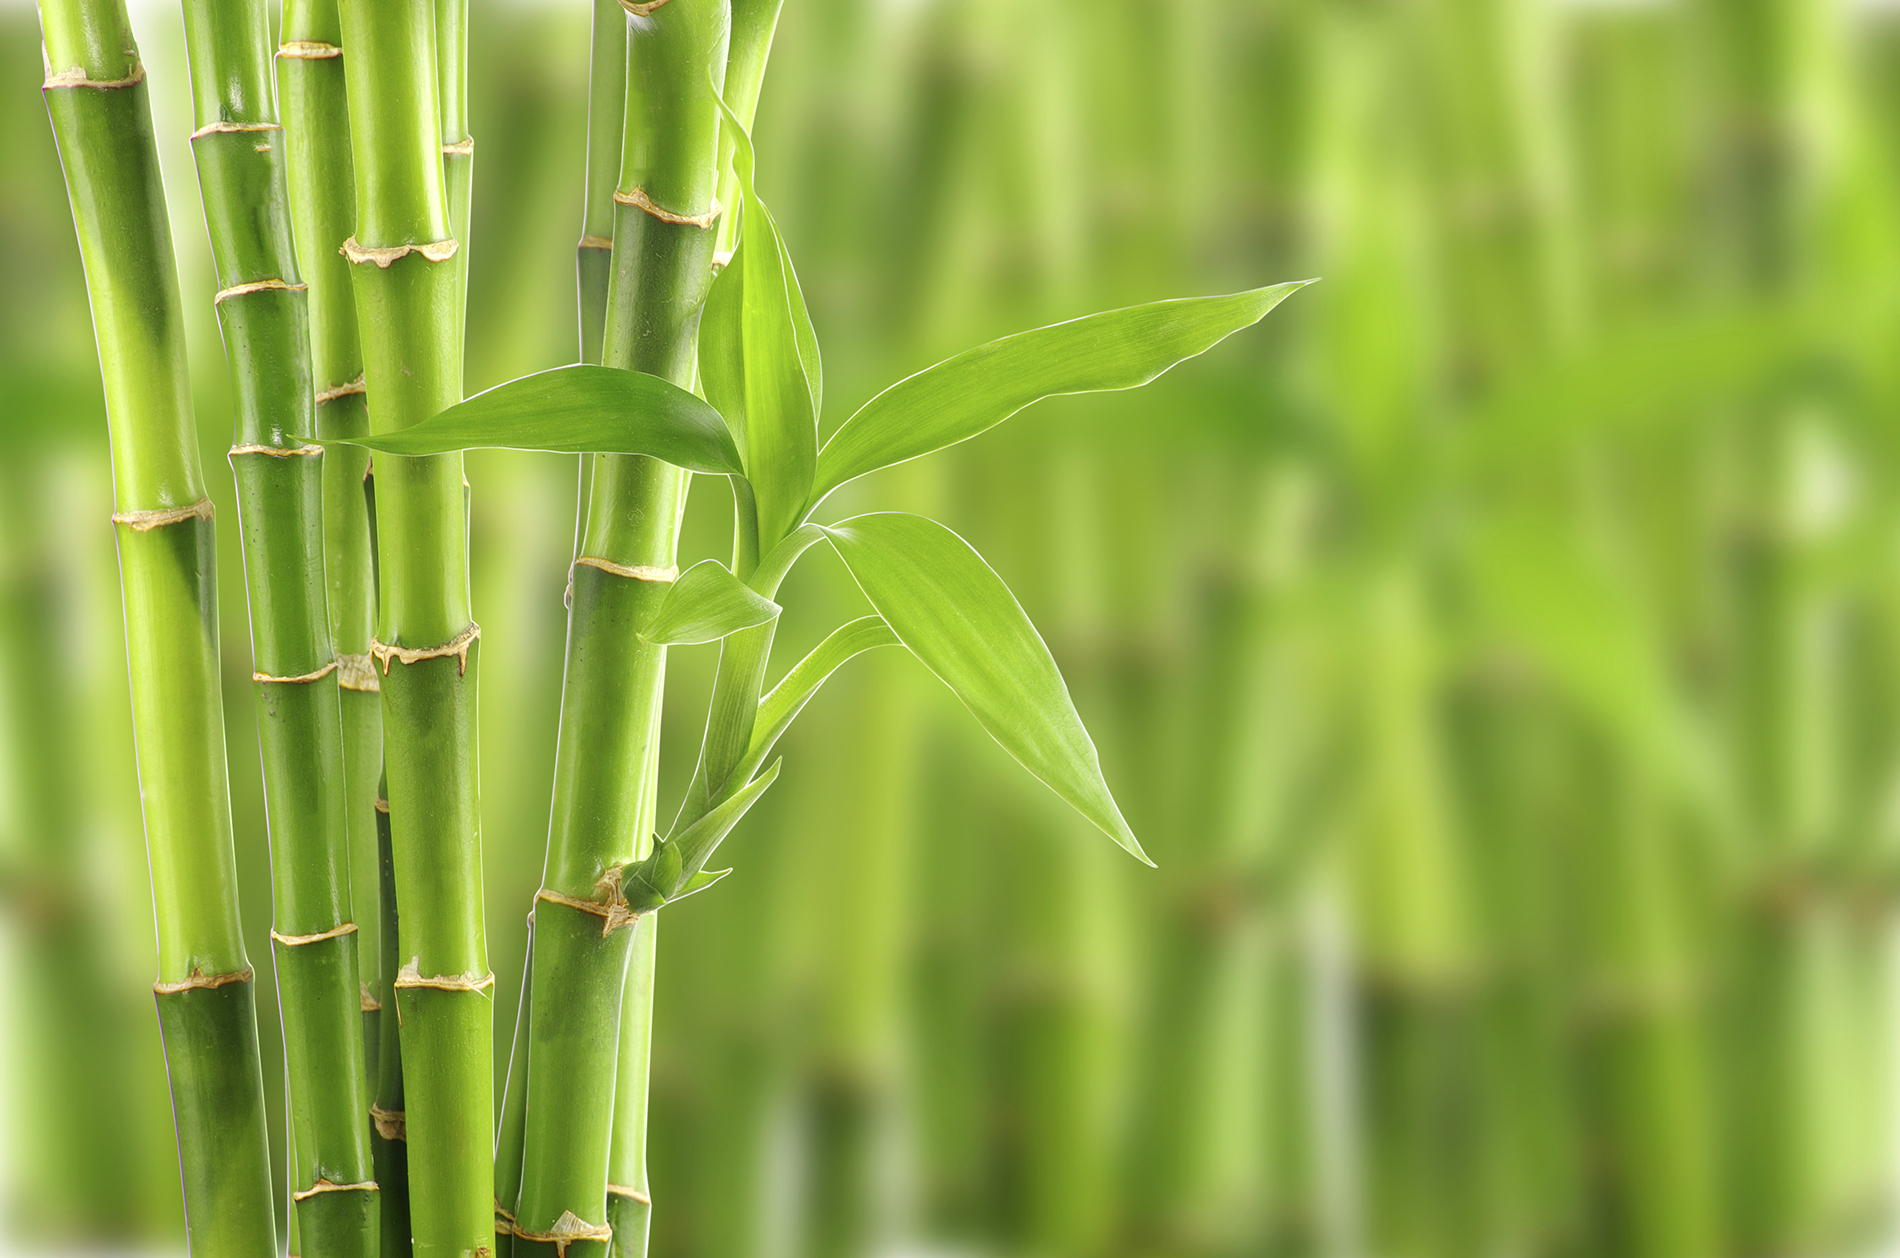 Grow green bamboo 52685 - Life force - Flowers